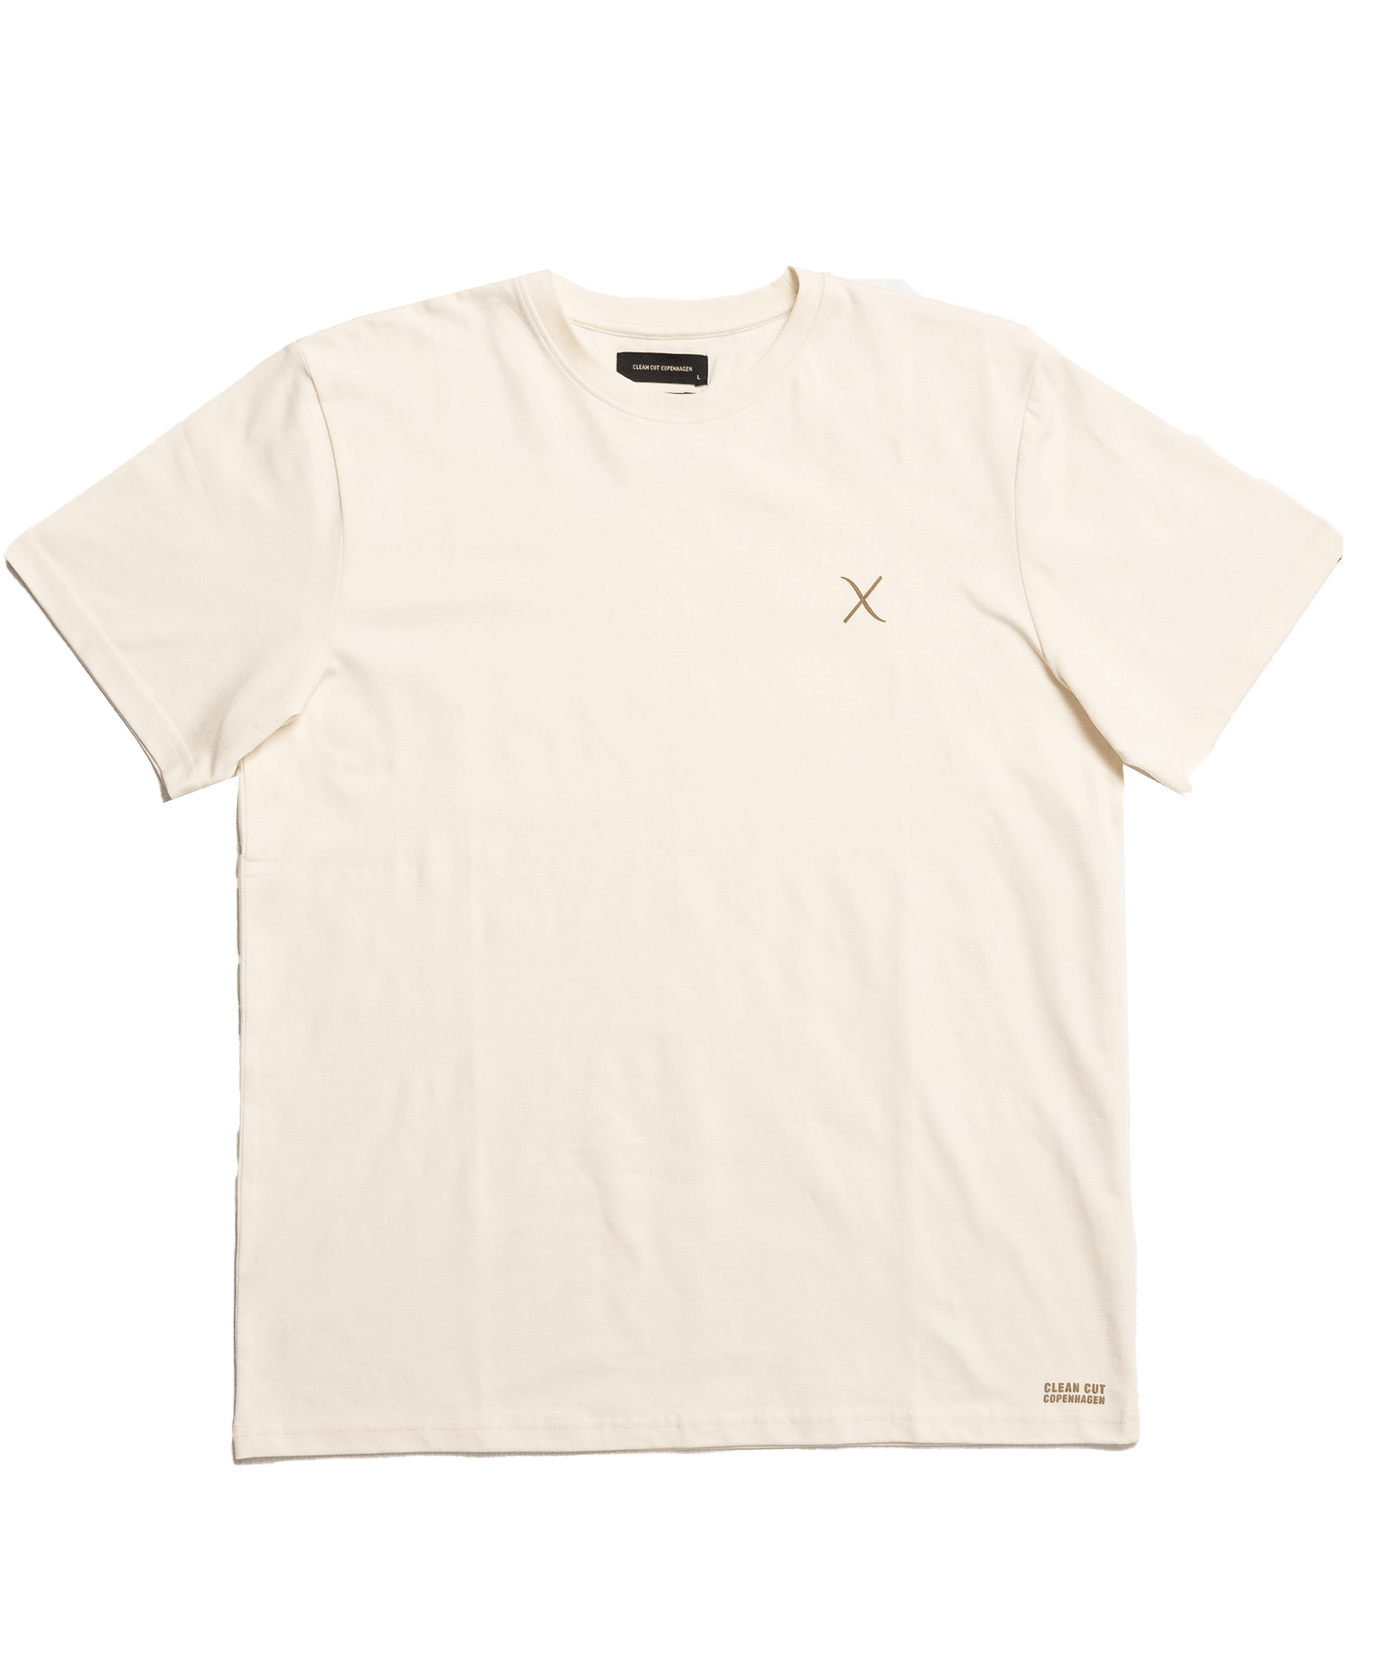 CLEANCUT - Cc3087 - Cross Logo T-shirt - Ecru